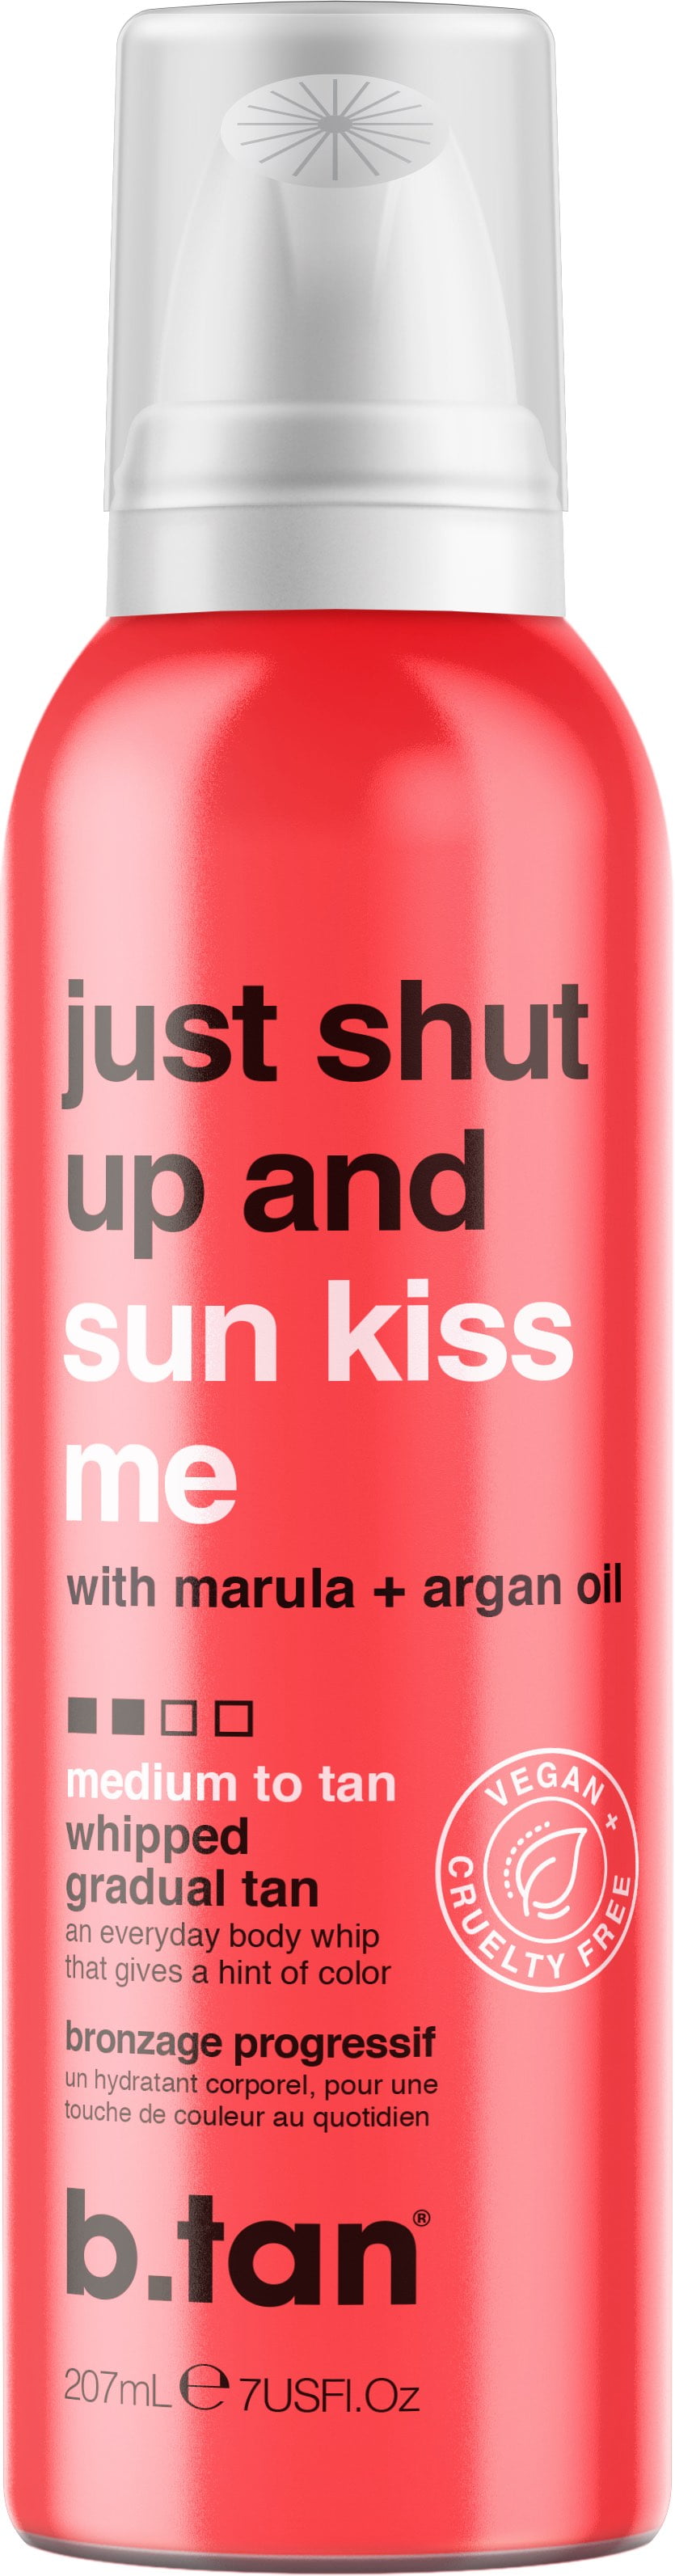 b.tan just shut up and sun kiss me whipped gradual tan with marula + argan oil 7 fl oz